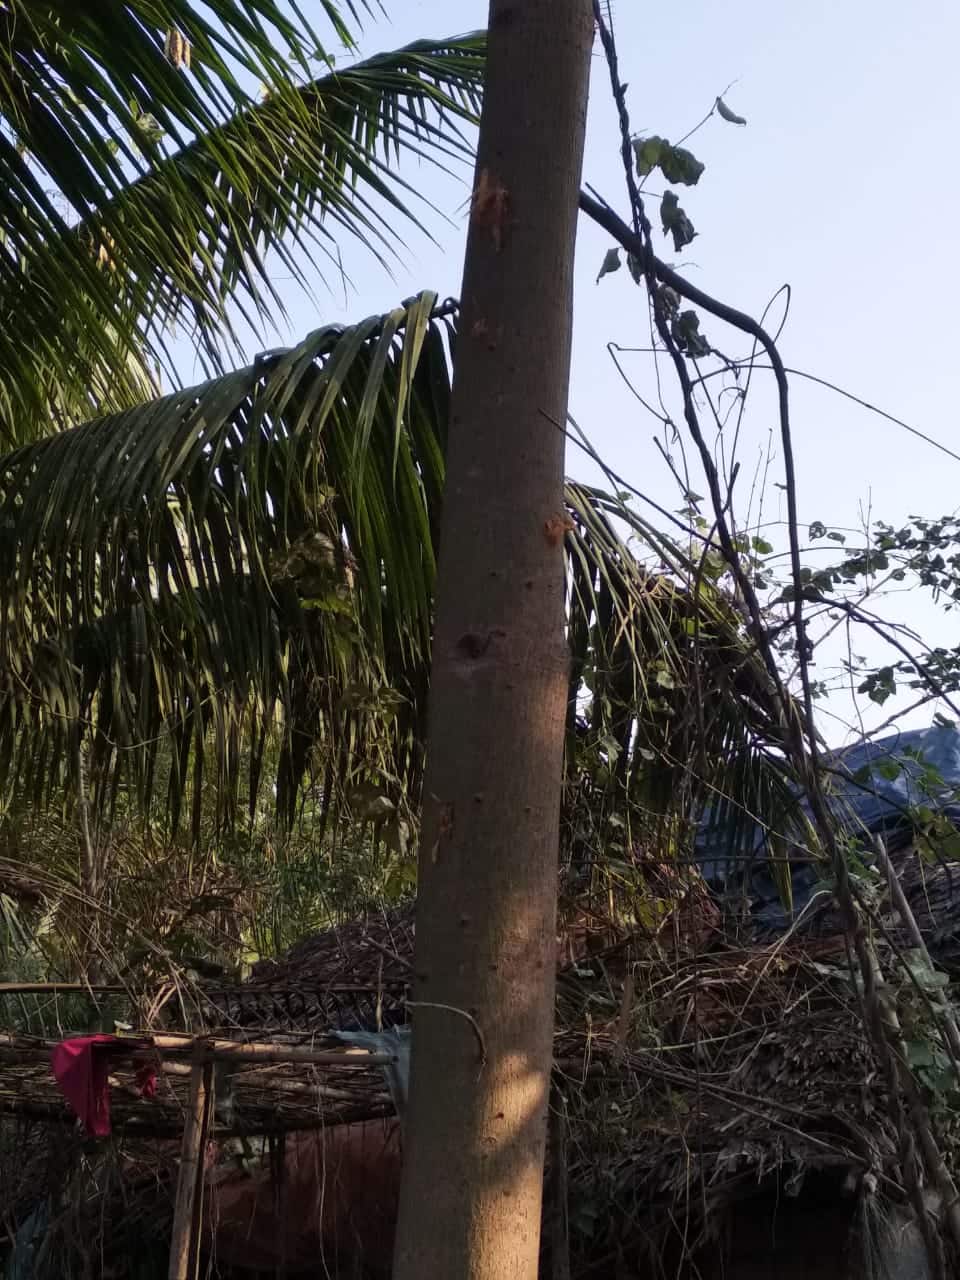 Bullets hit in Arkar Taung hamlet, Rathedaung